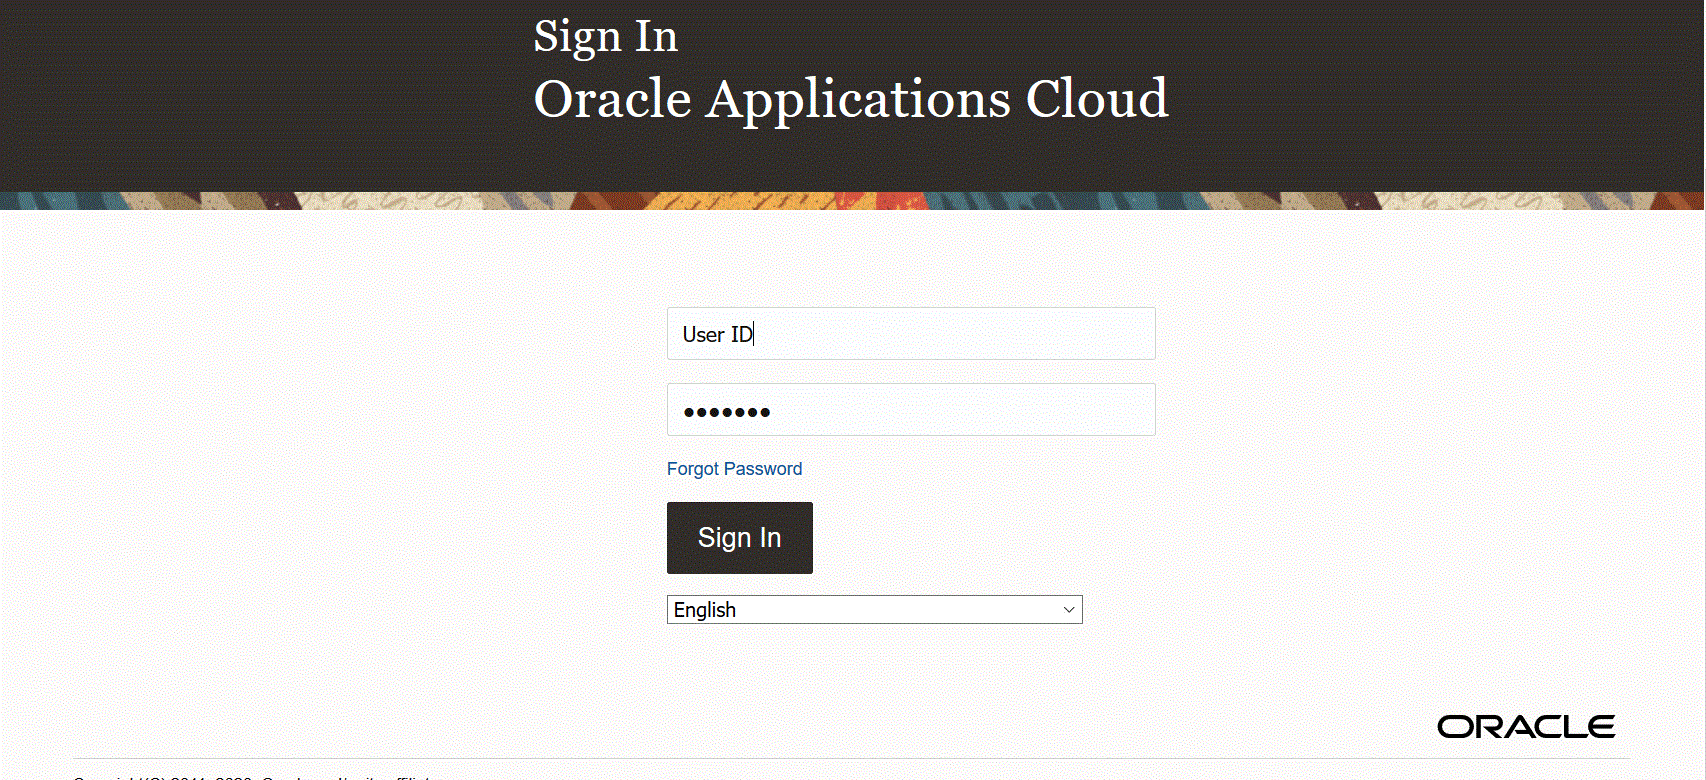 Das Bild zeigt Oracle Applications Cloud